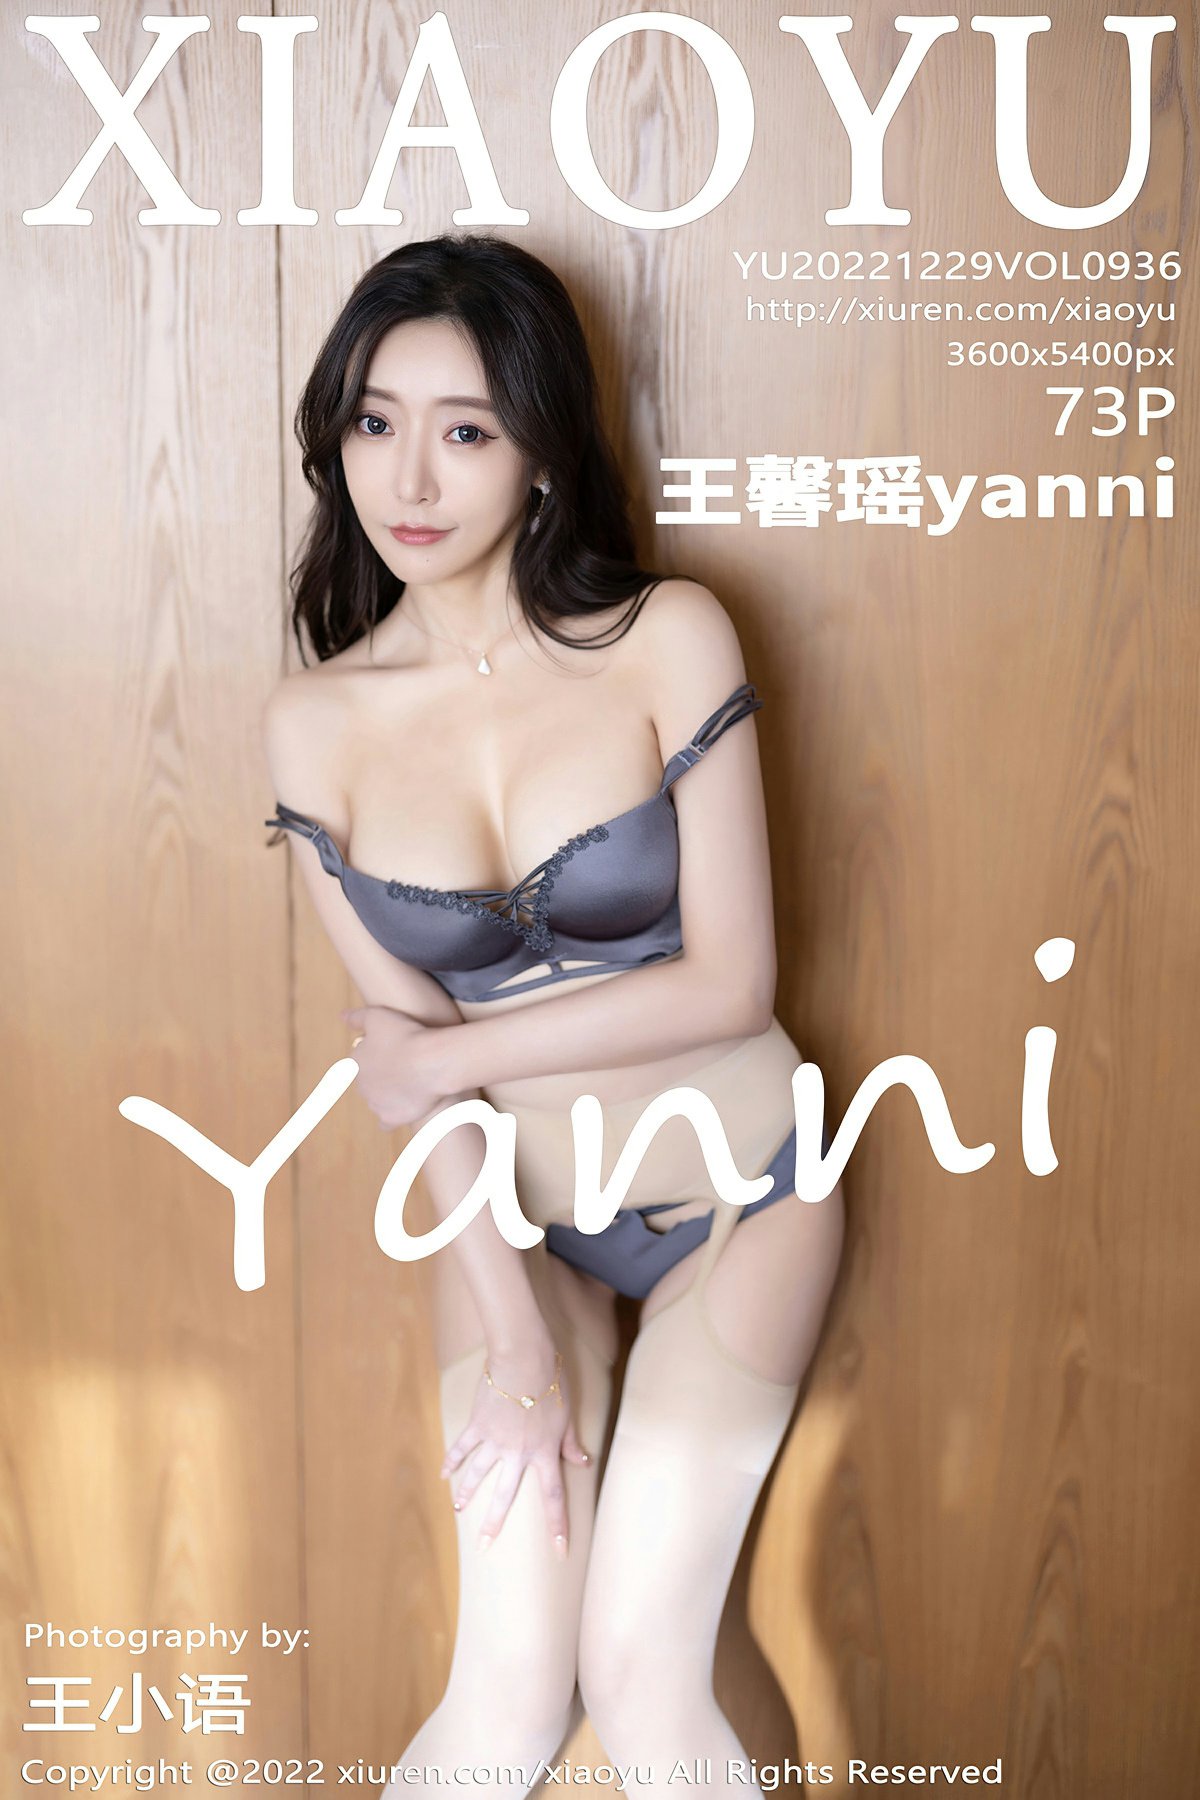 [XIAOYU语画界] VOL.936 王馨瑶yanni1 